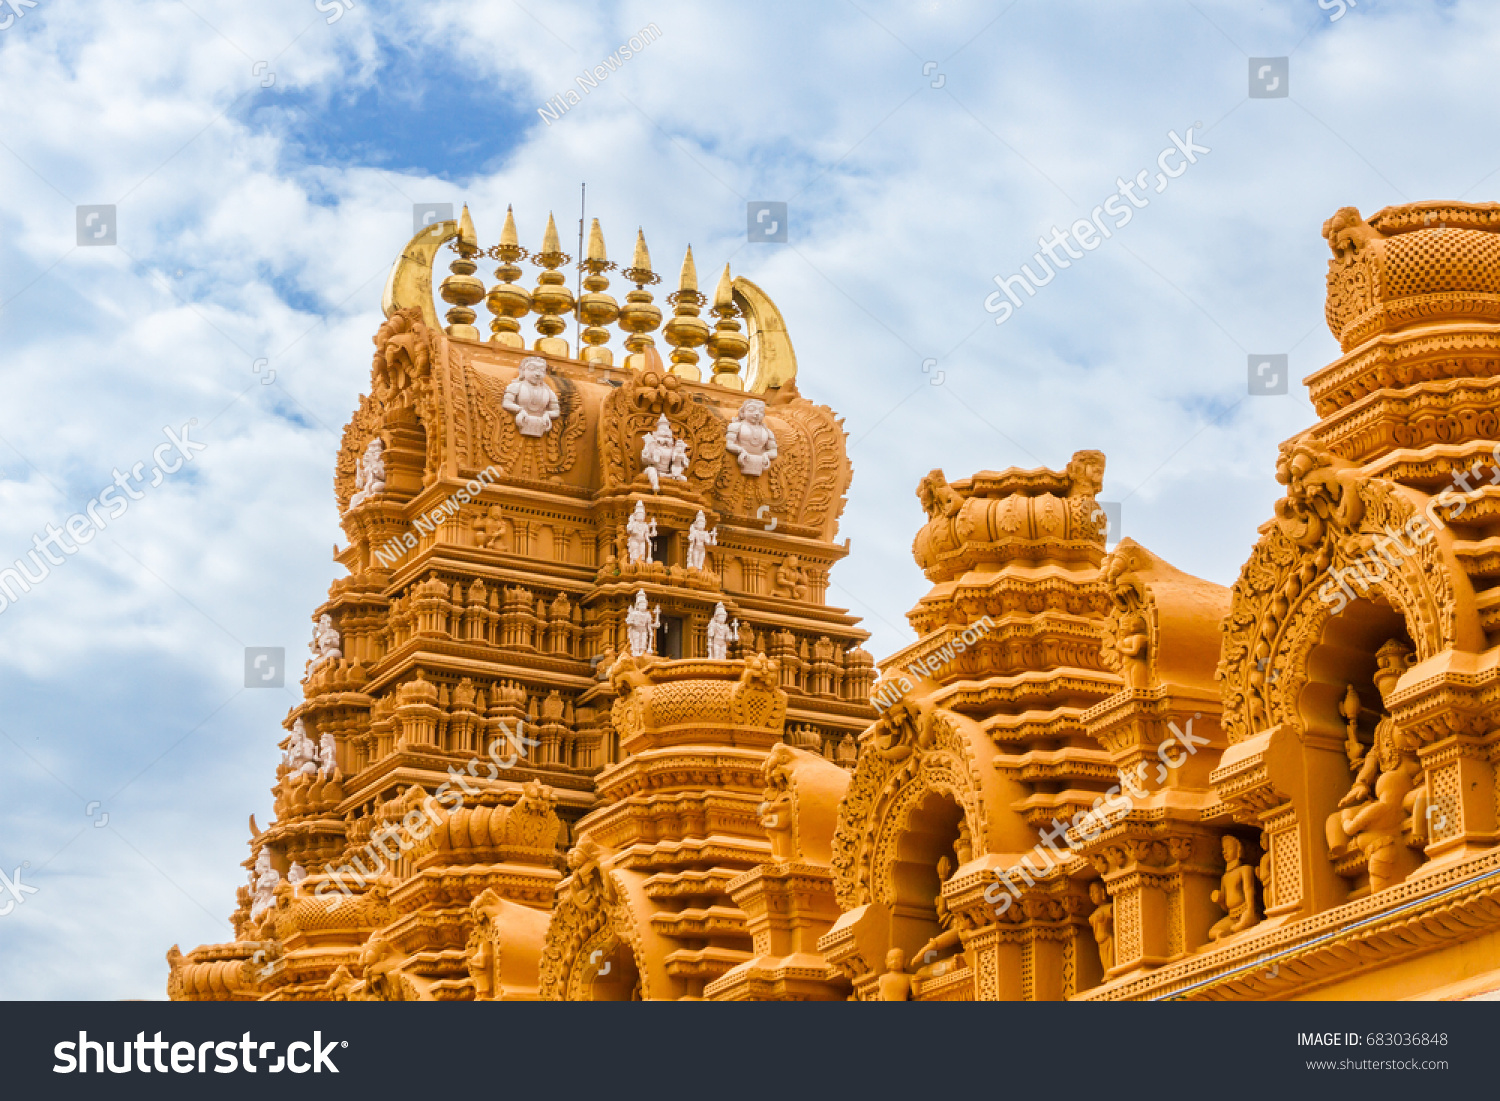 The gopuram tower at the famous temple of Srikanthesvara at Nanjangud, South India. #683036848